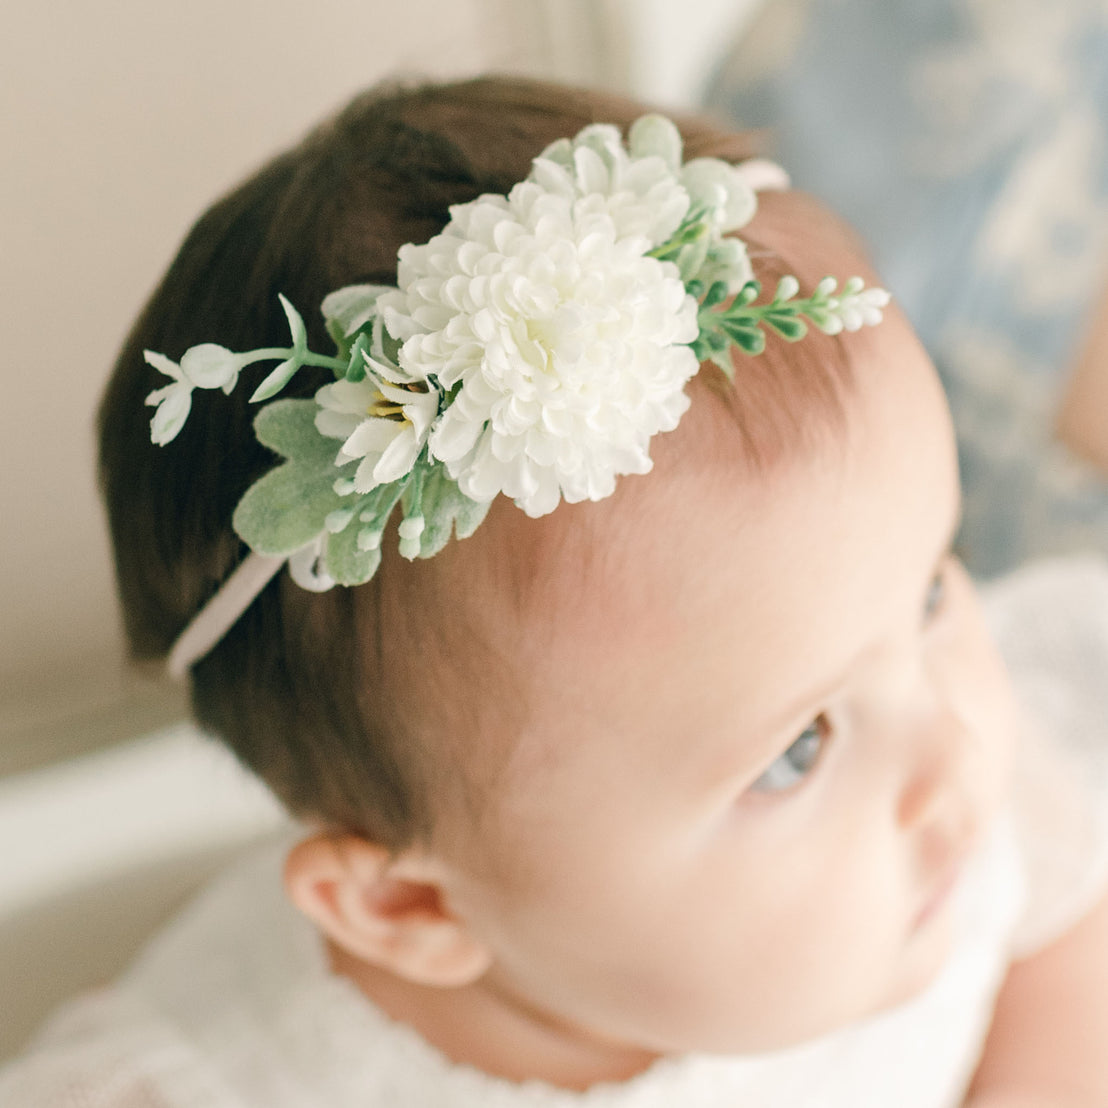 Baby girl wearing the white Emily Flower Headband.